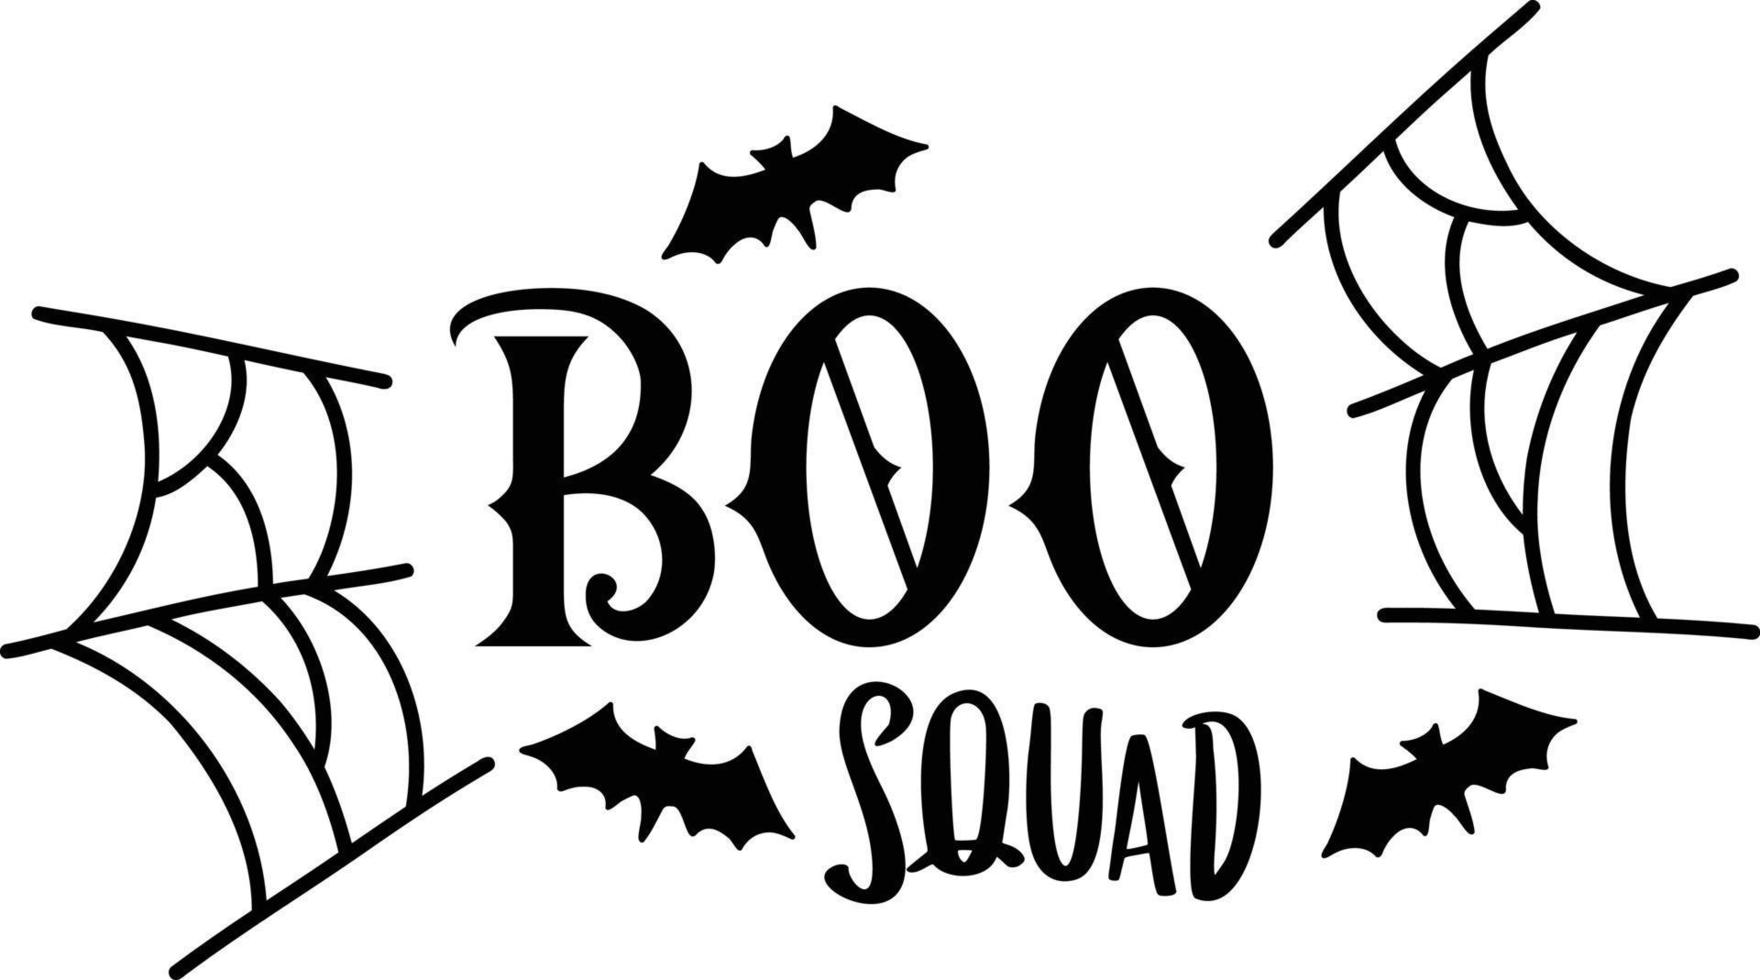 BOO squad lettering illustration vector